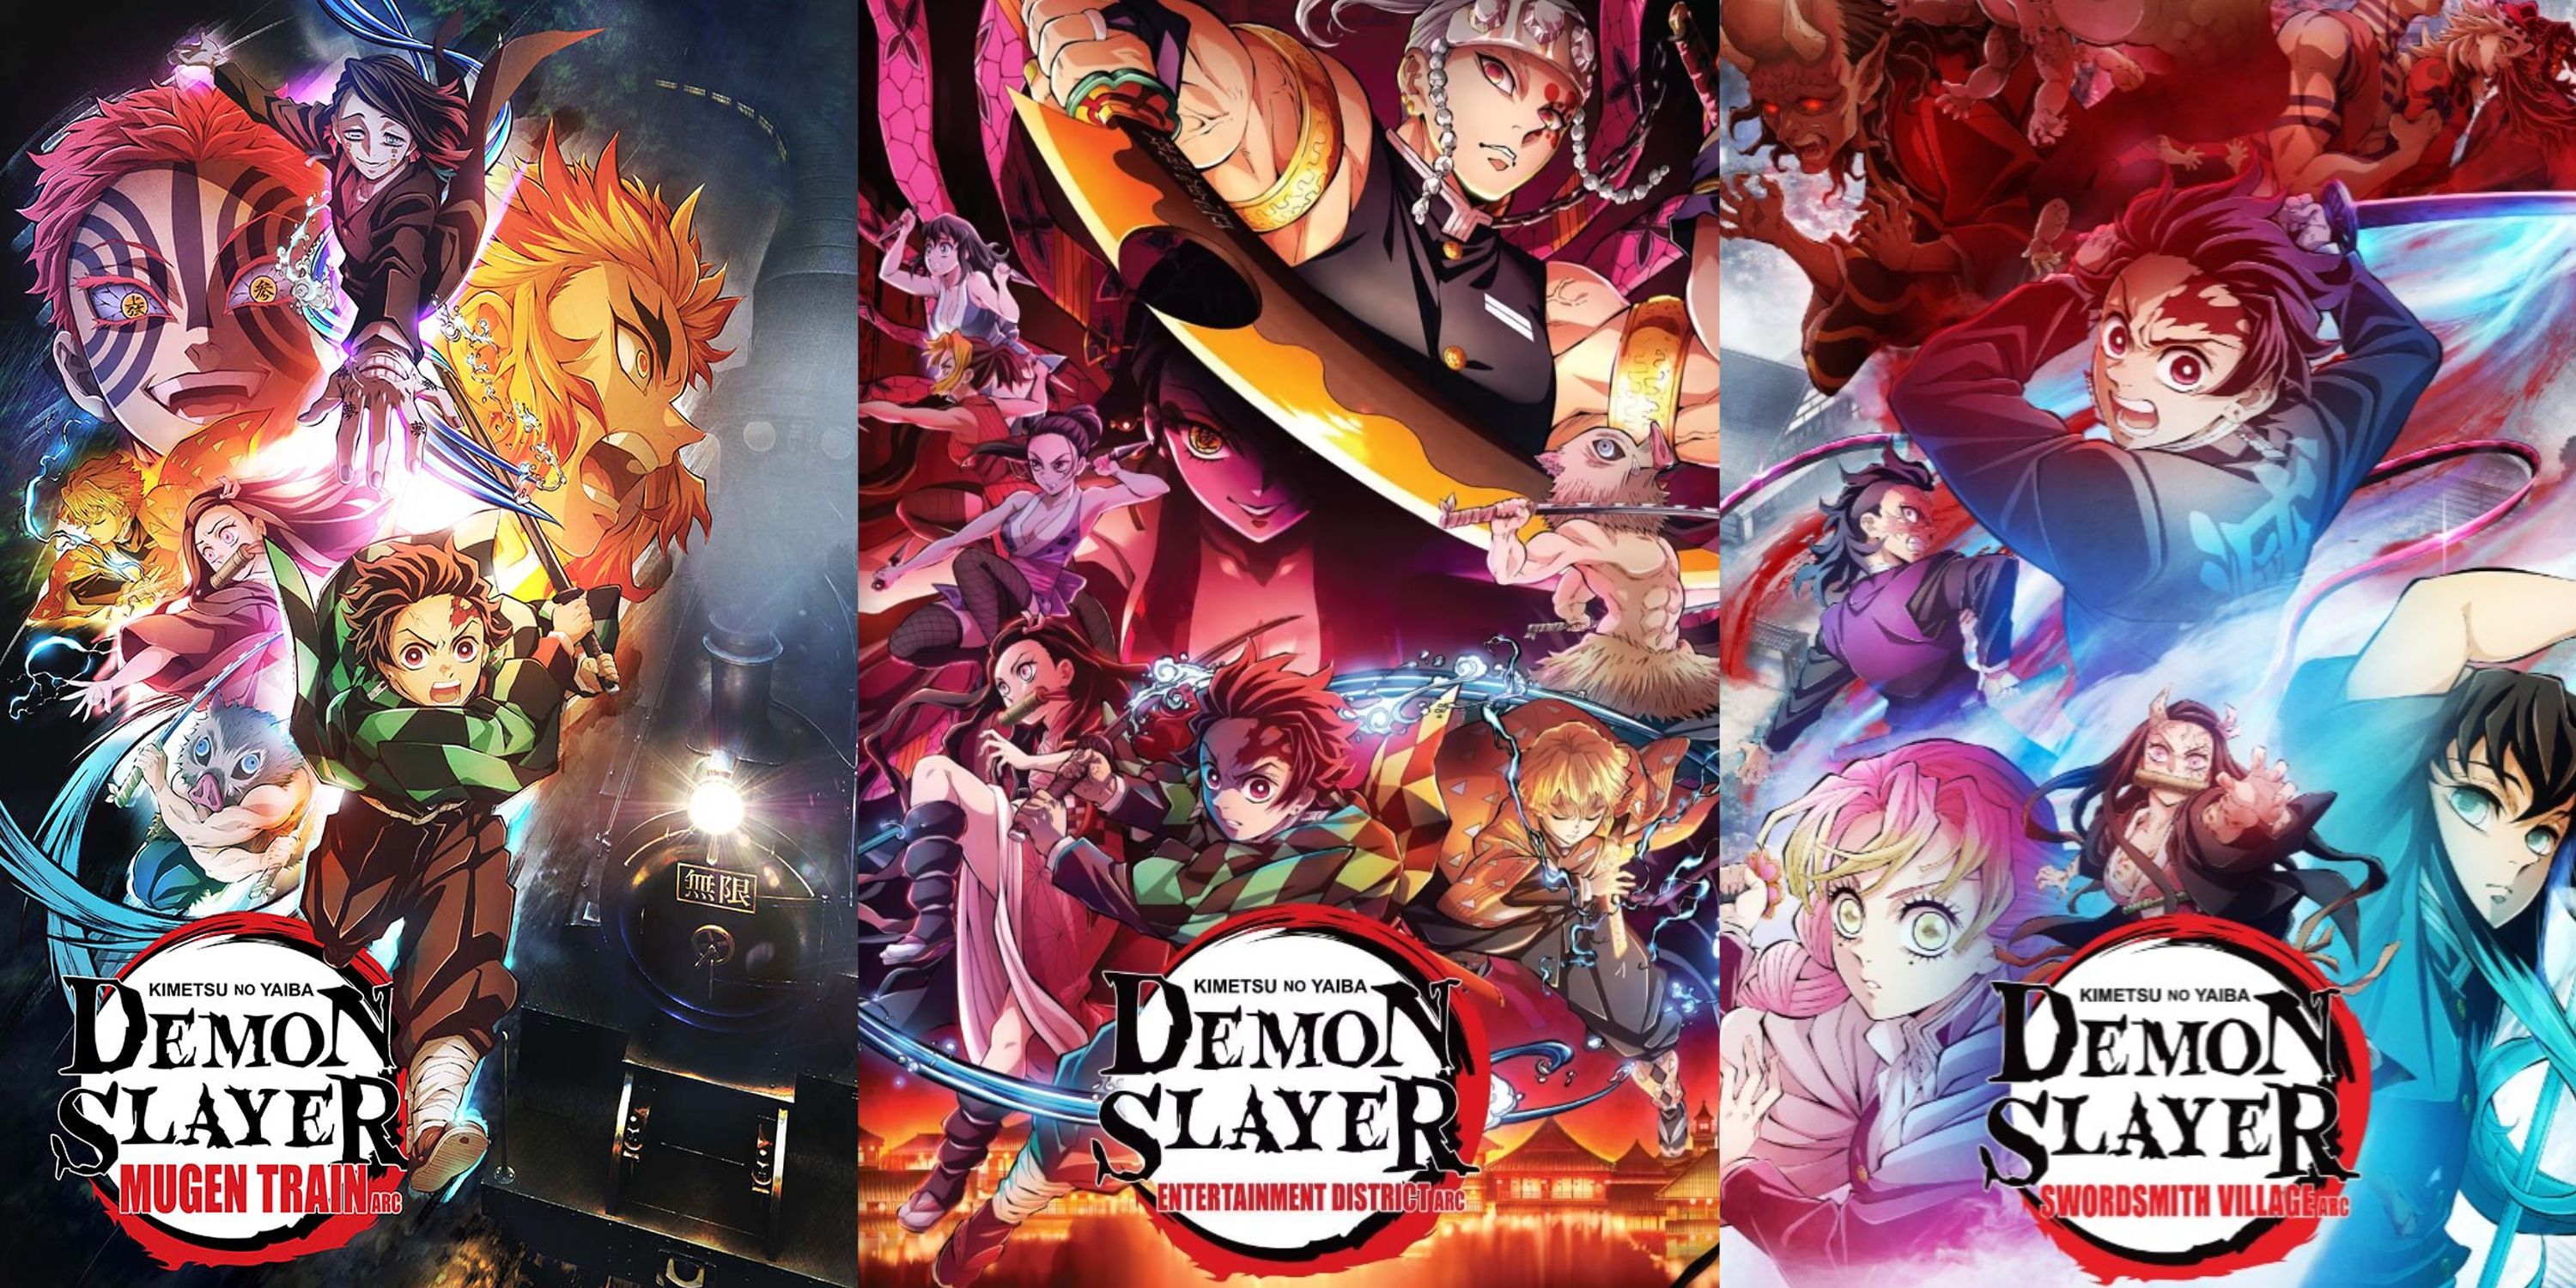 Demon Slayer Season 3 Episode 2 Review: Fighting To Achieve